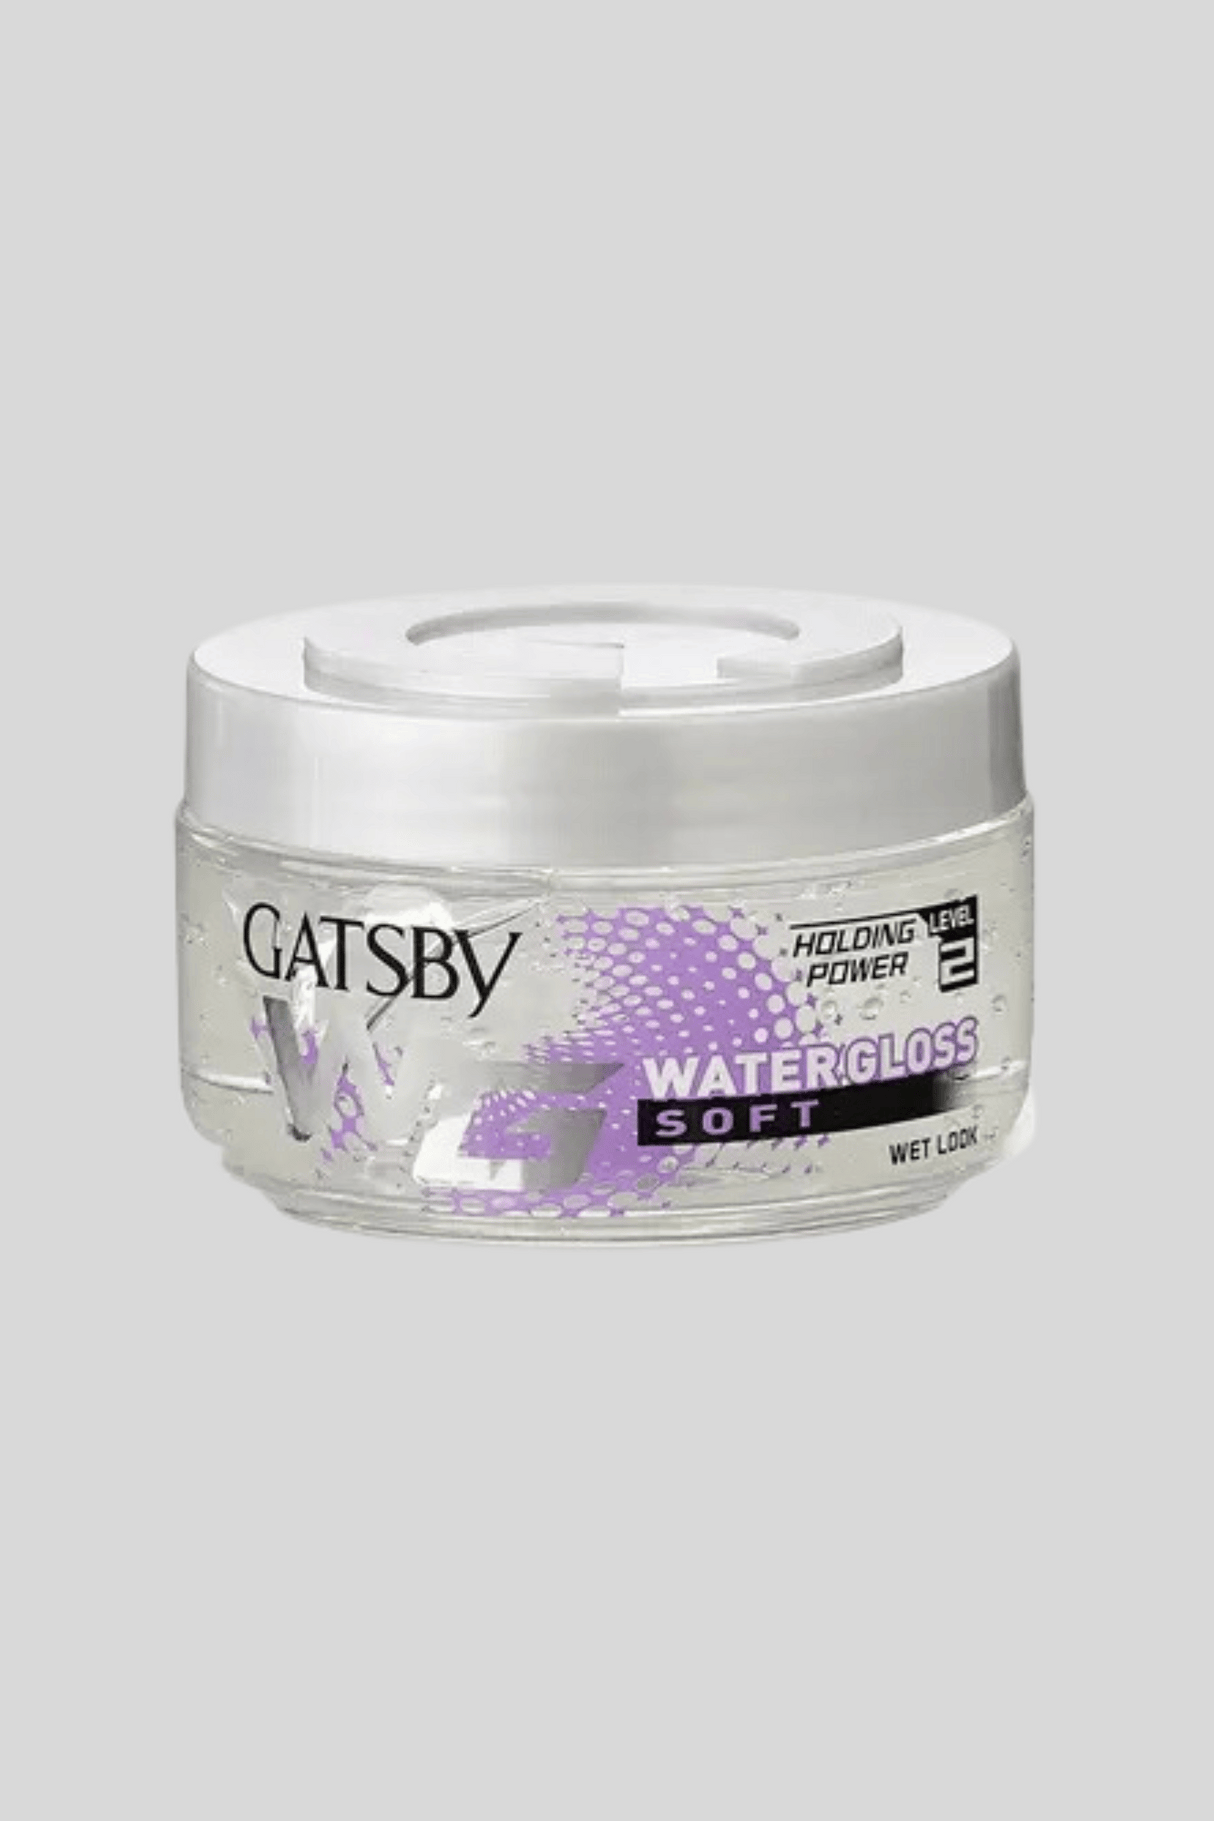 gatsby hair gel jar water gloss soft 150g